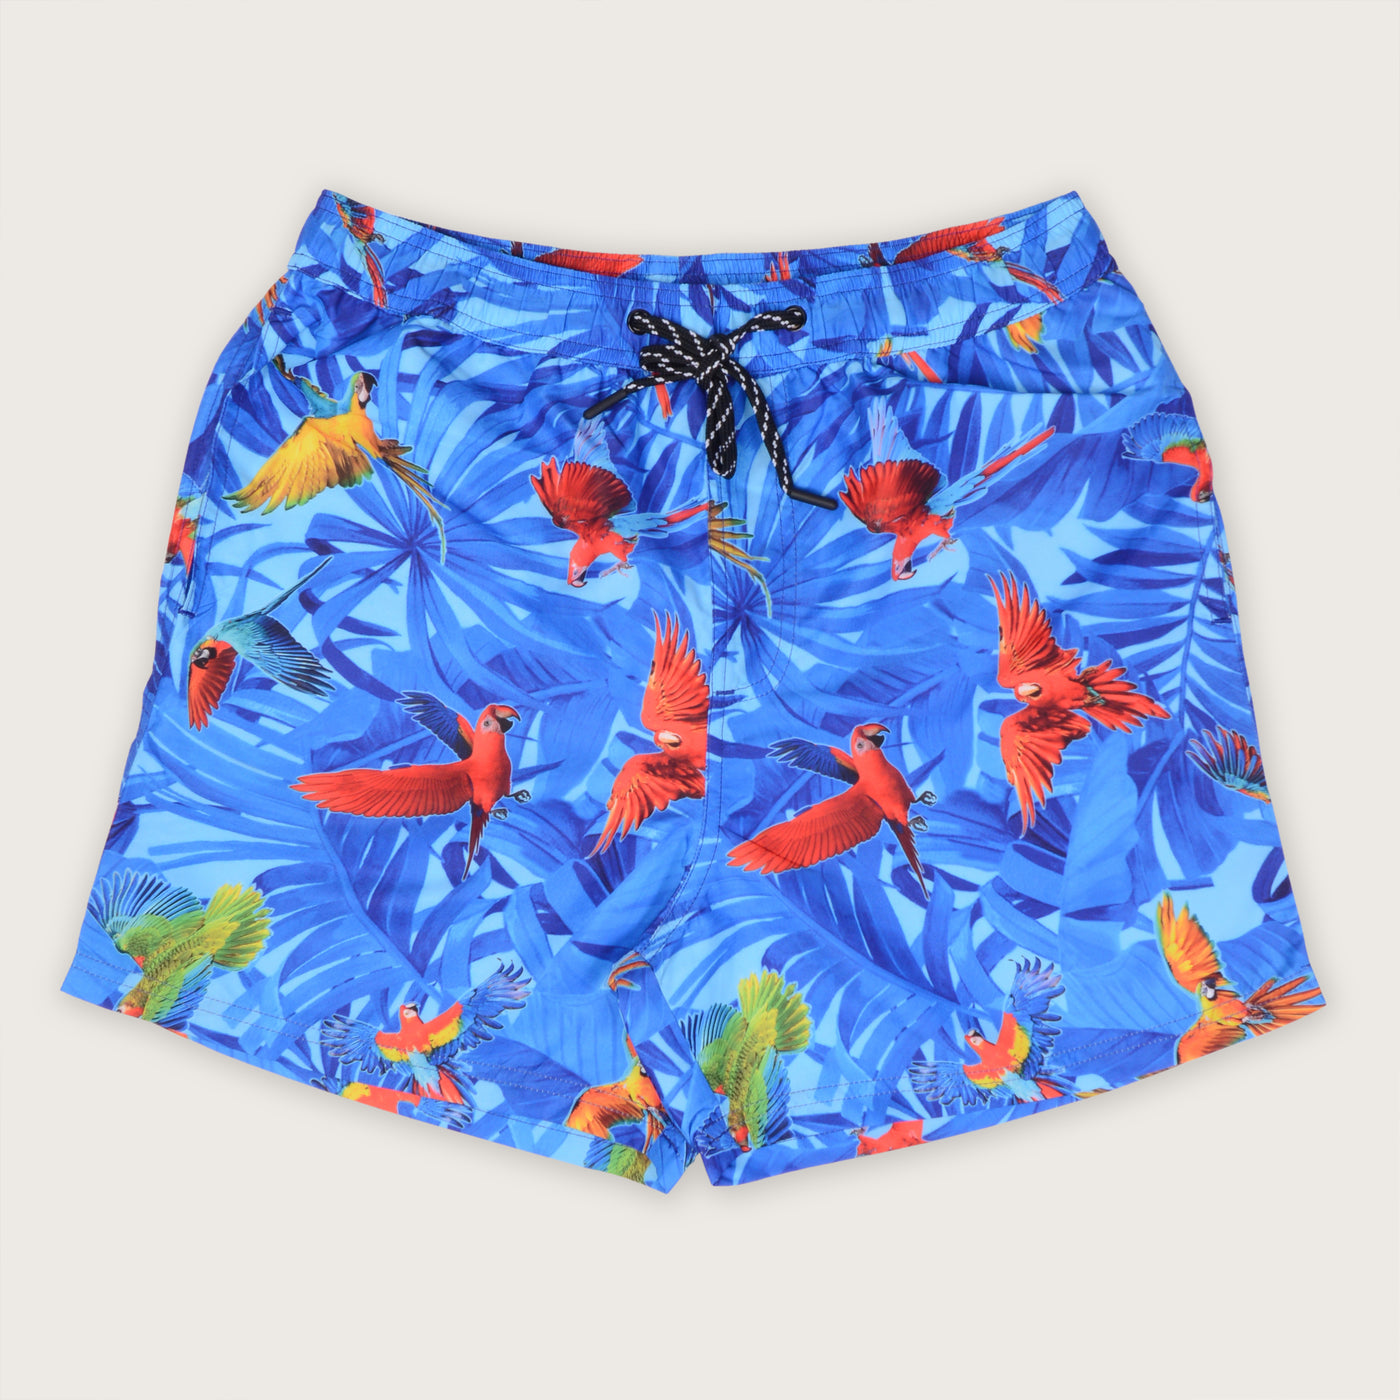 Buy now escape to rio swim shorts